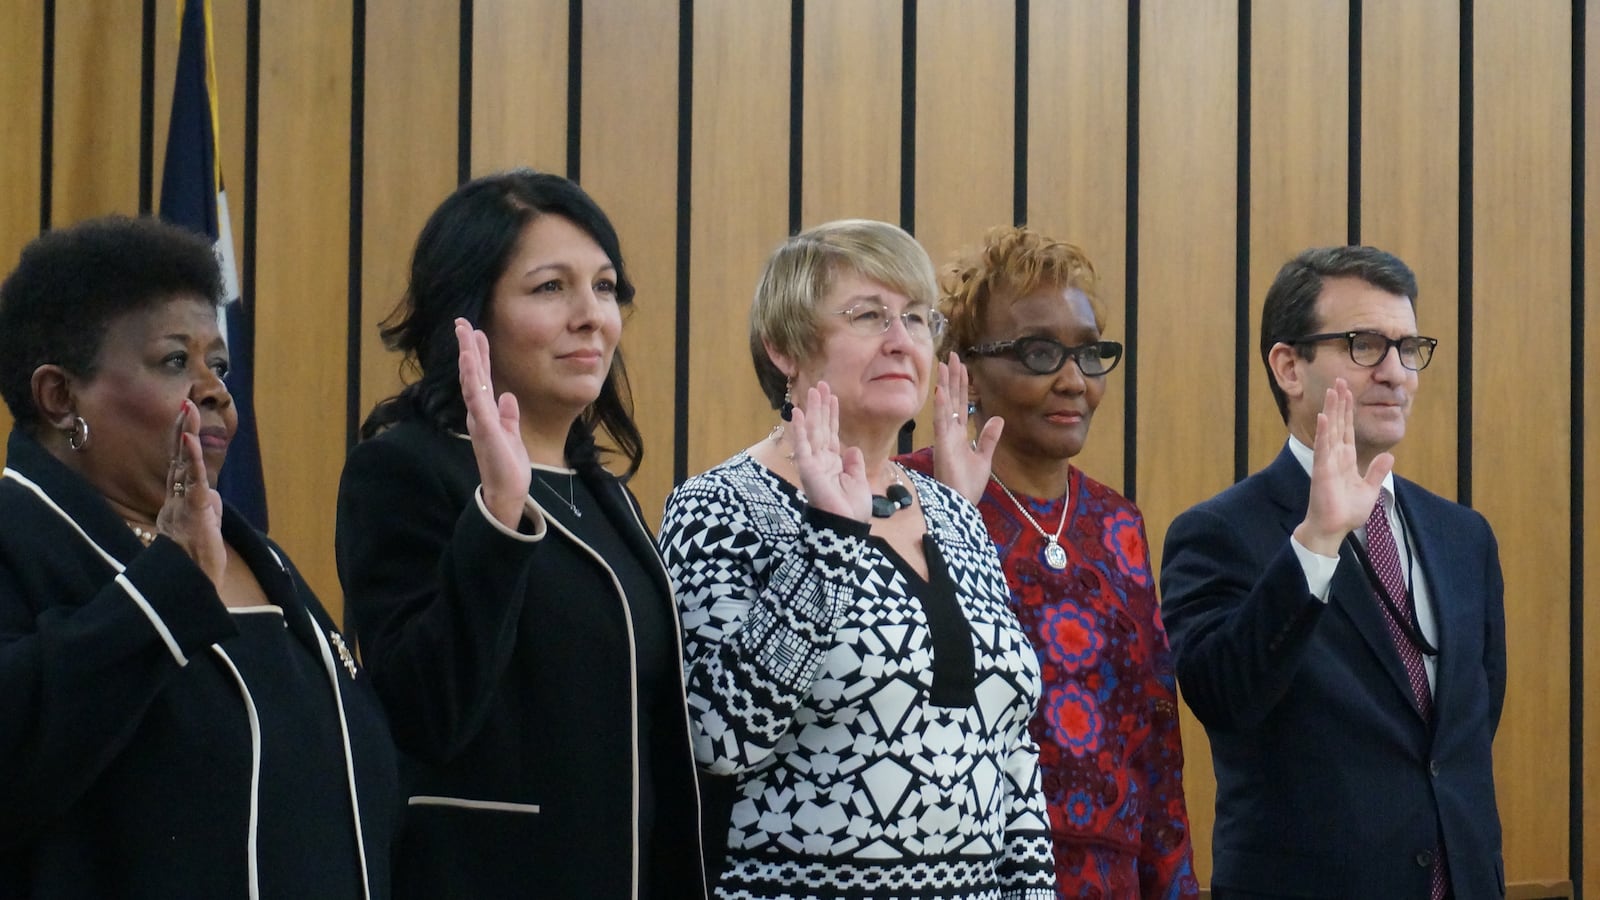 Five IPS board members were sworn in. Left to right: Elizabeth Gore, Dorene Rodriguez Hoops, Diane Arnold, Venita Moore and Michael O'Connor.